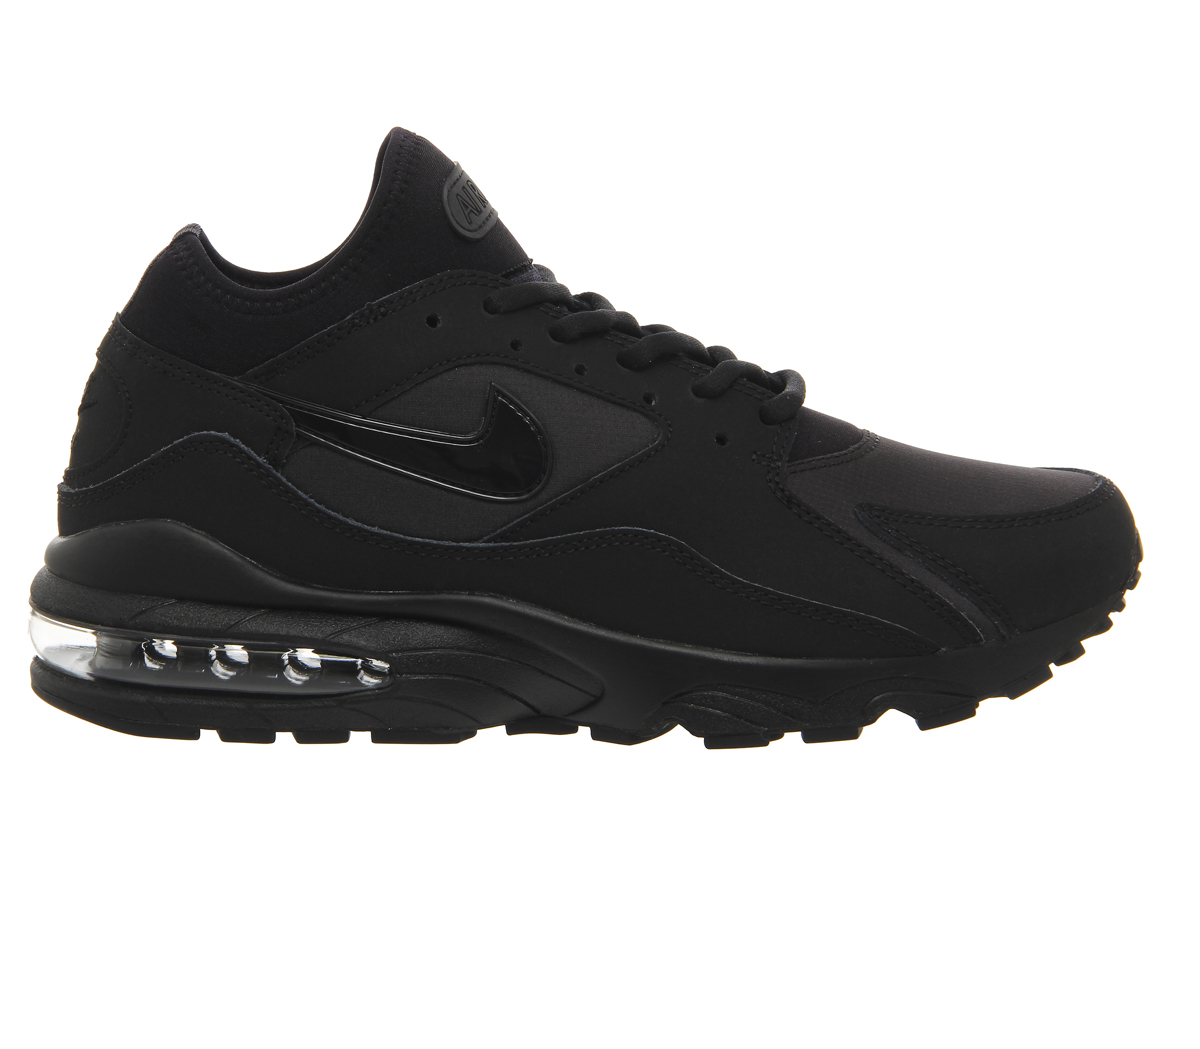 Nike Air Max 93 in Black for Men - Lyst